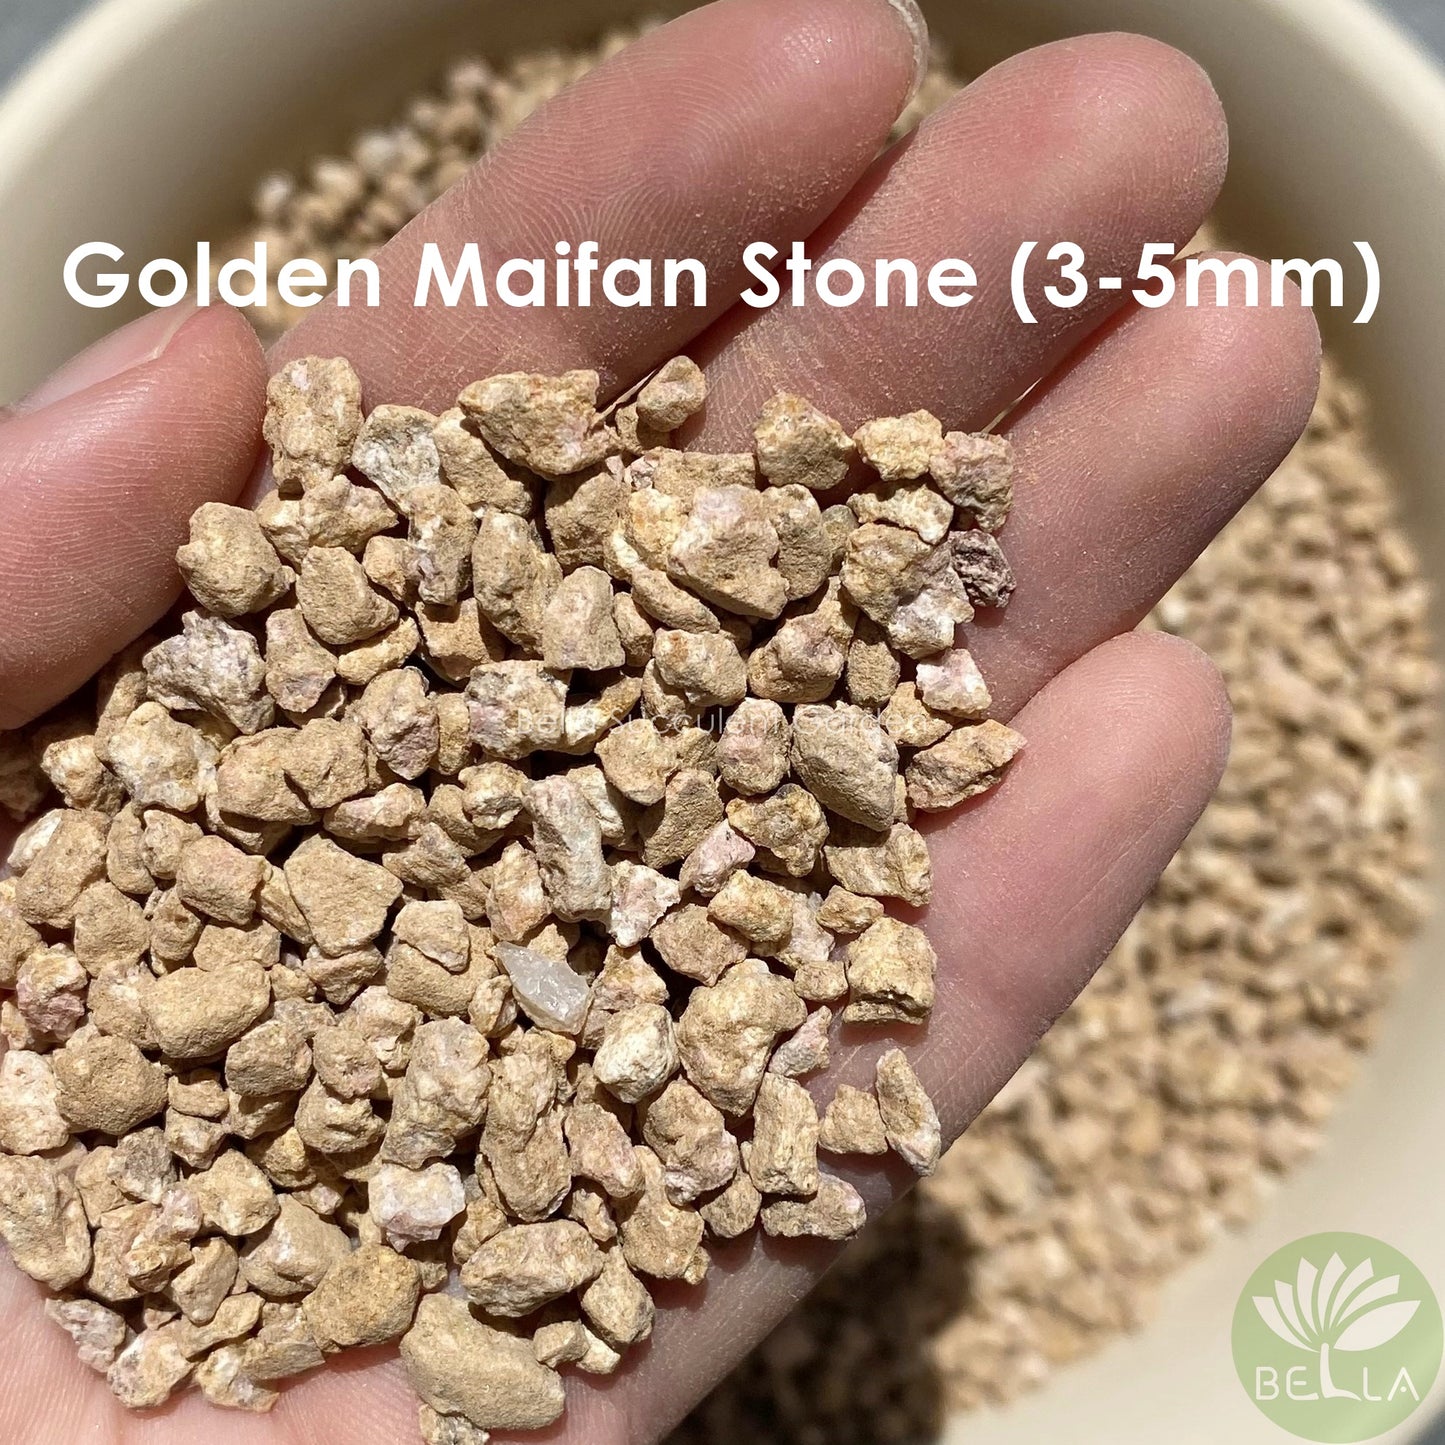 Golden Maifan Stone